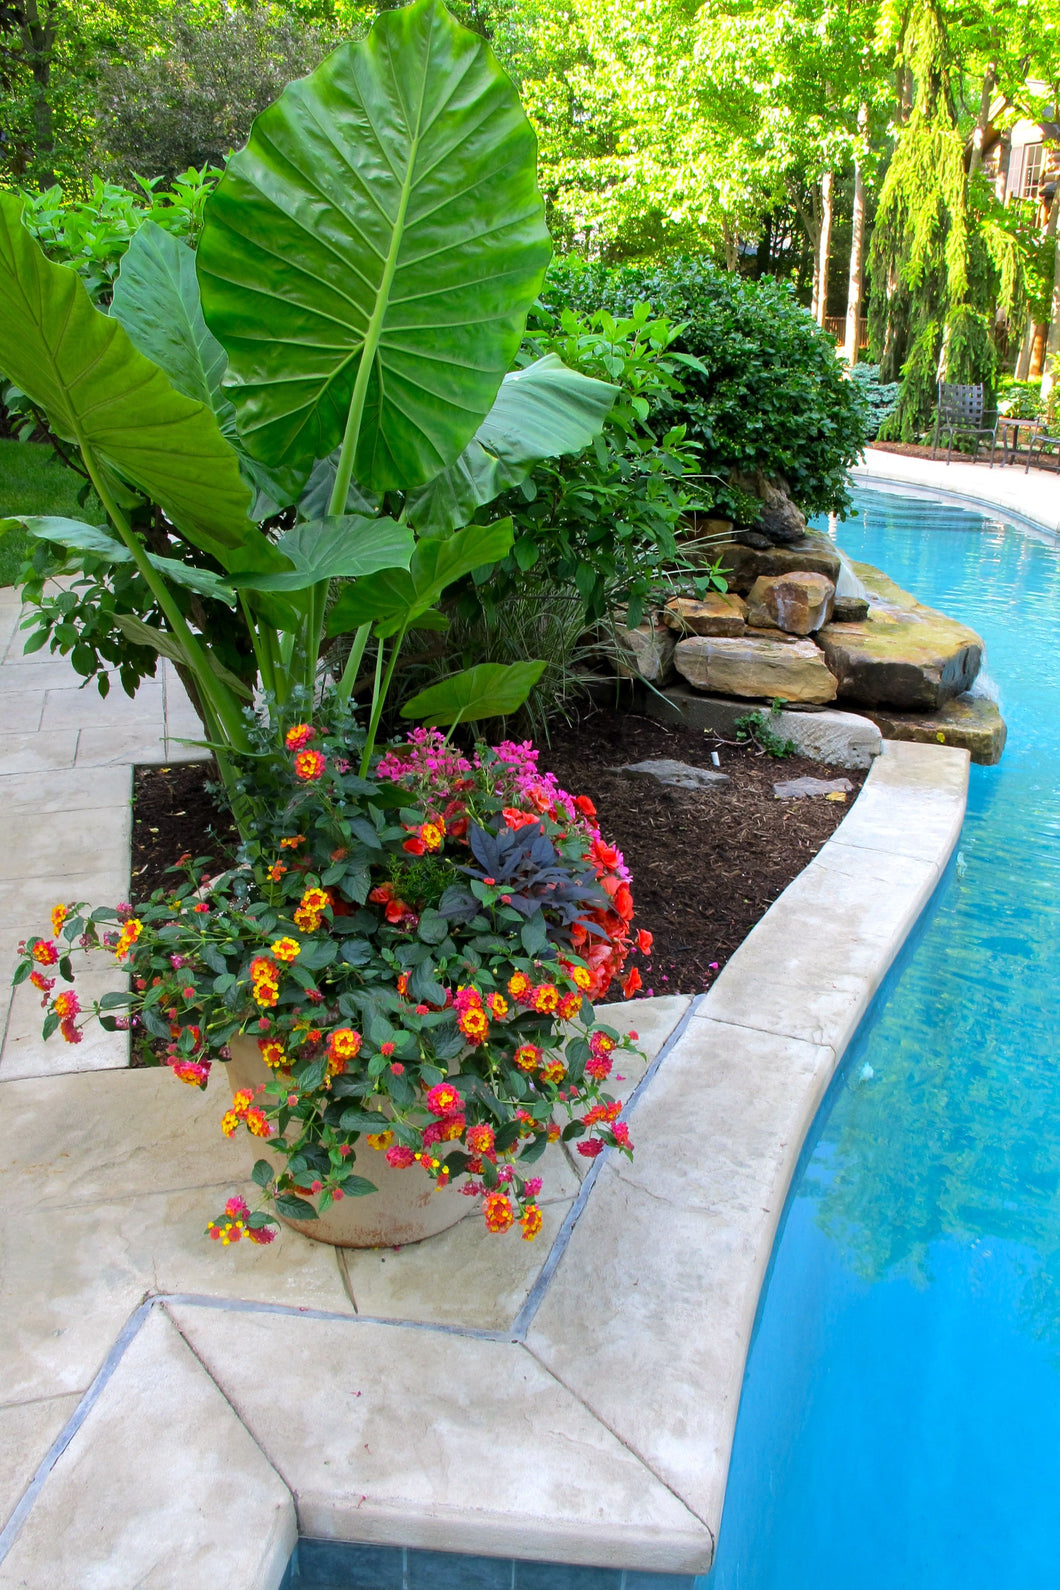 Tropical Plants 101: Make Your Backyard Your Tropical Oasis - May 4